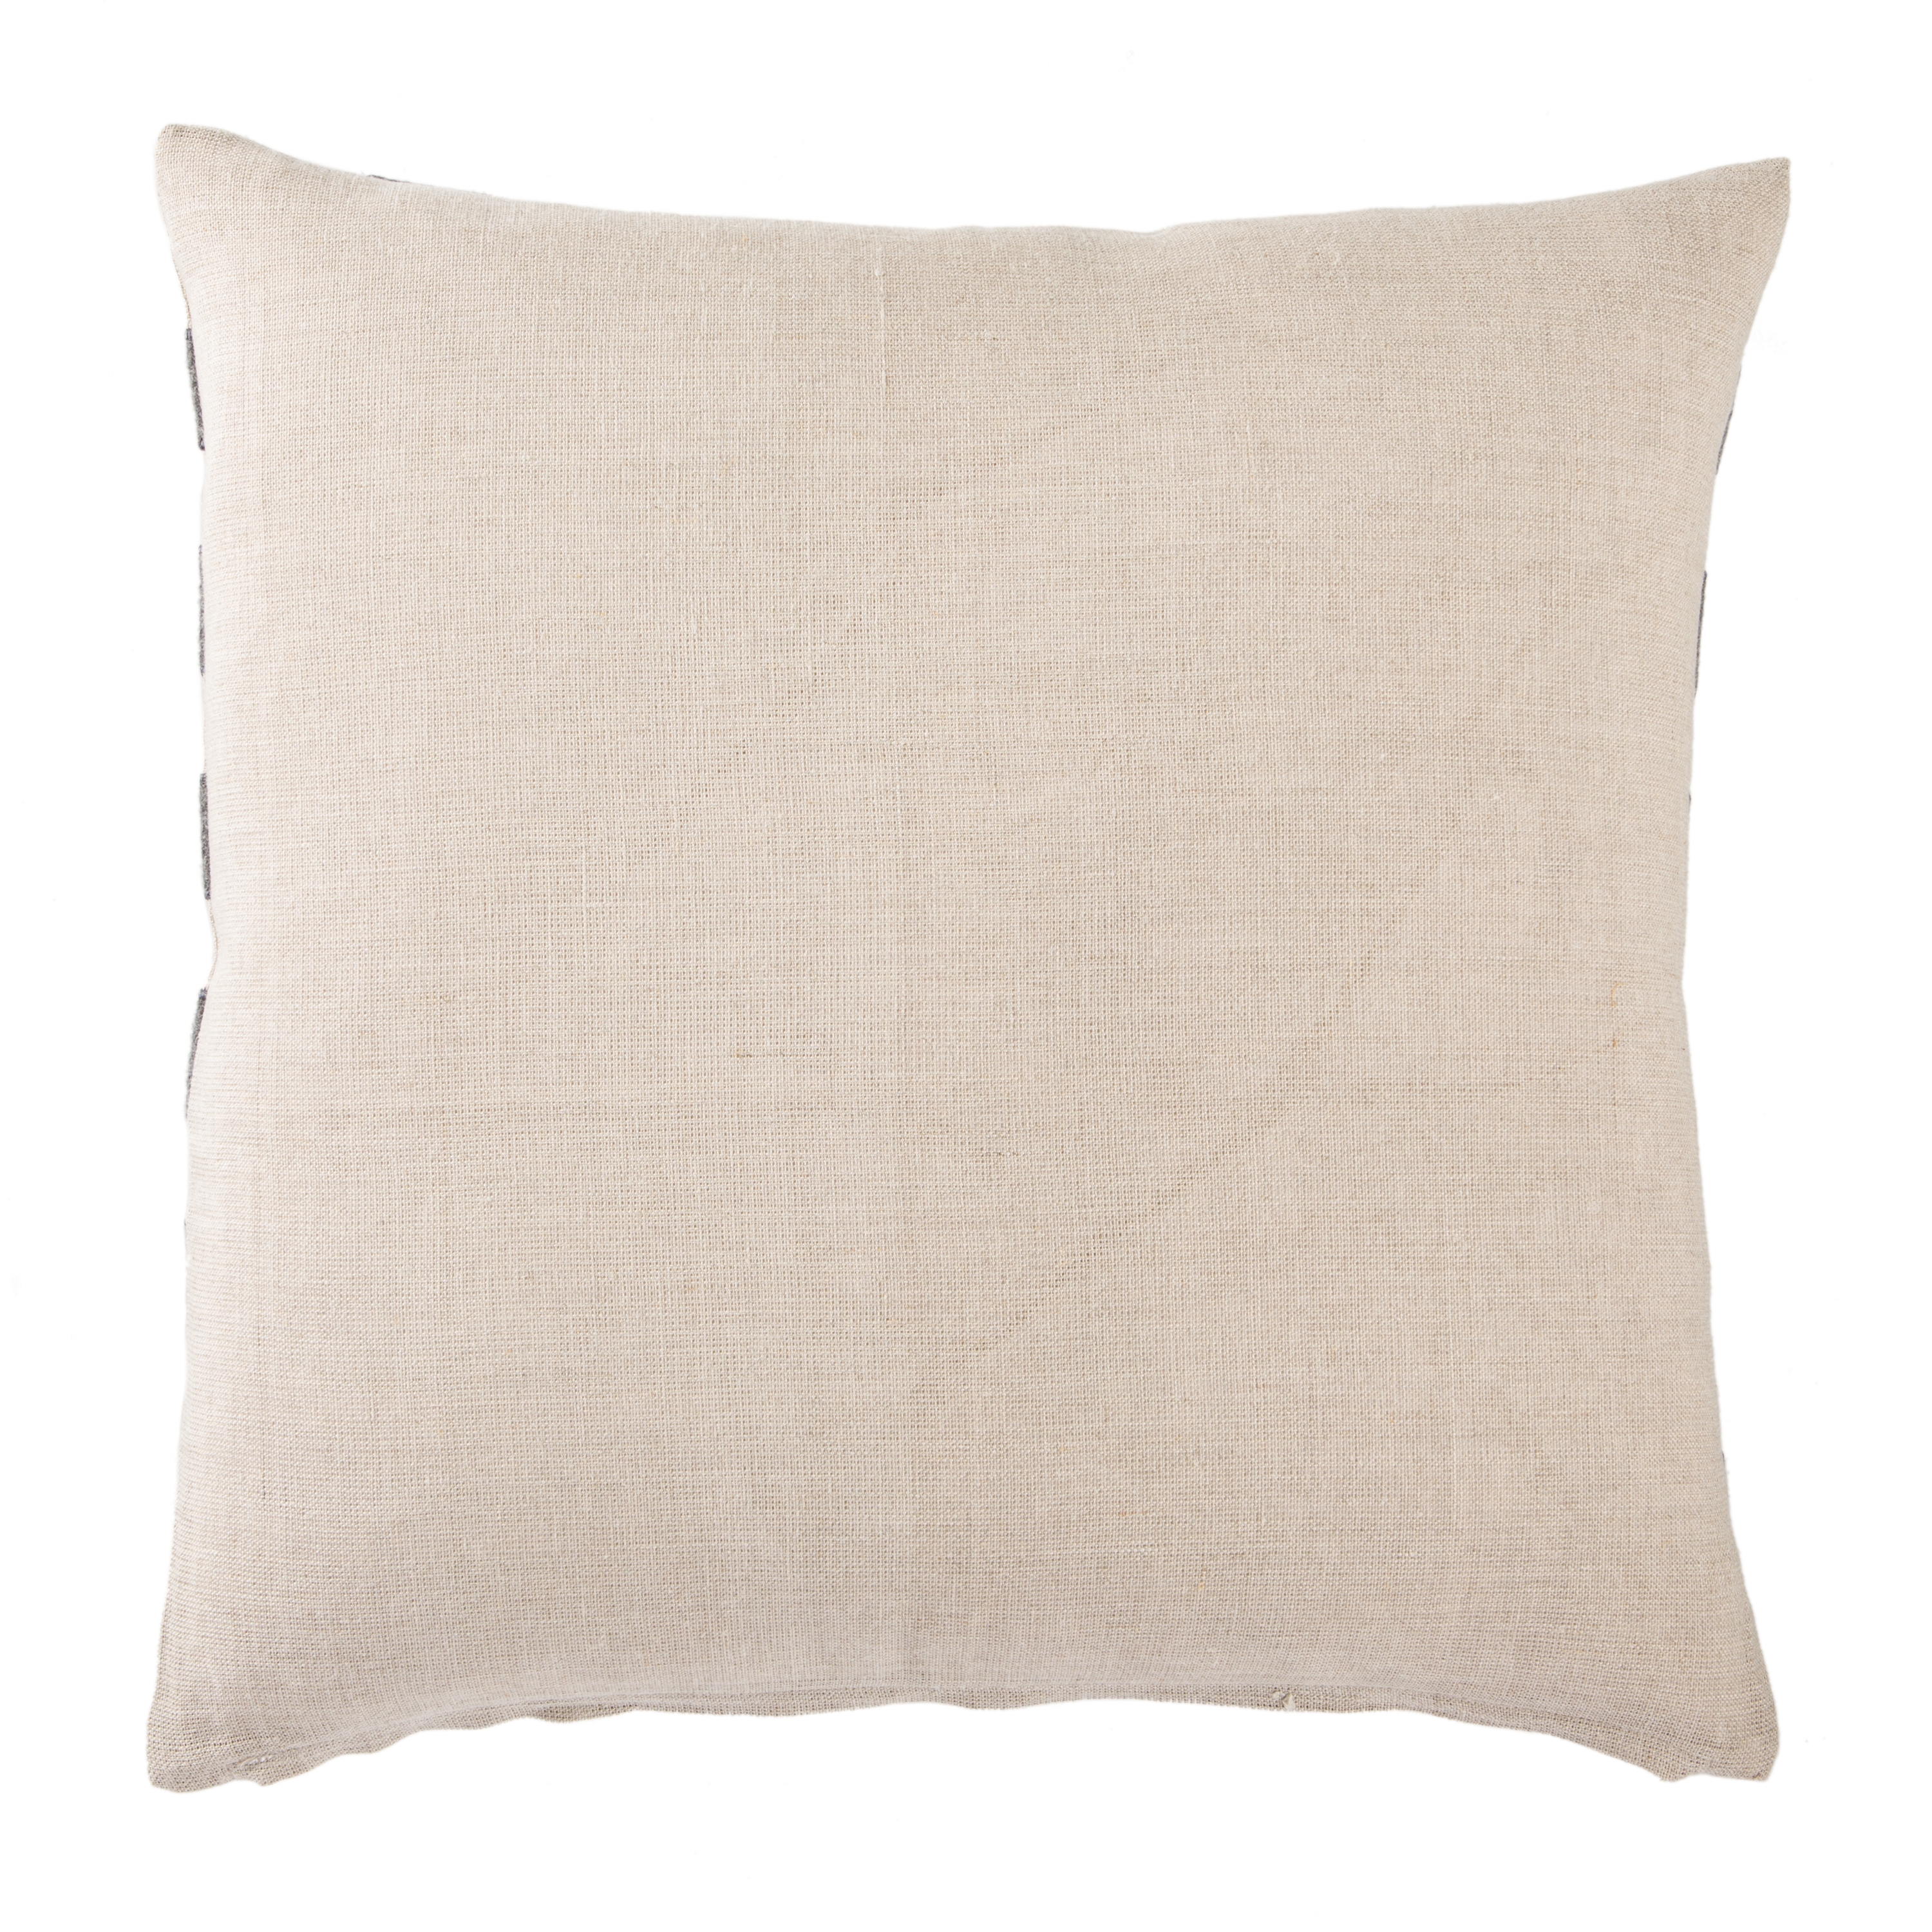 Design (US) Gray 22"X22" Pillow - Image 1